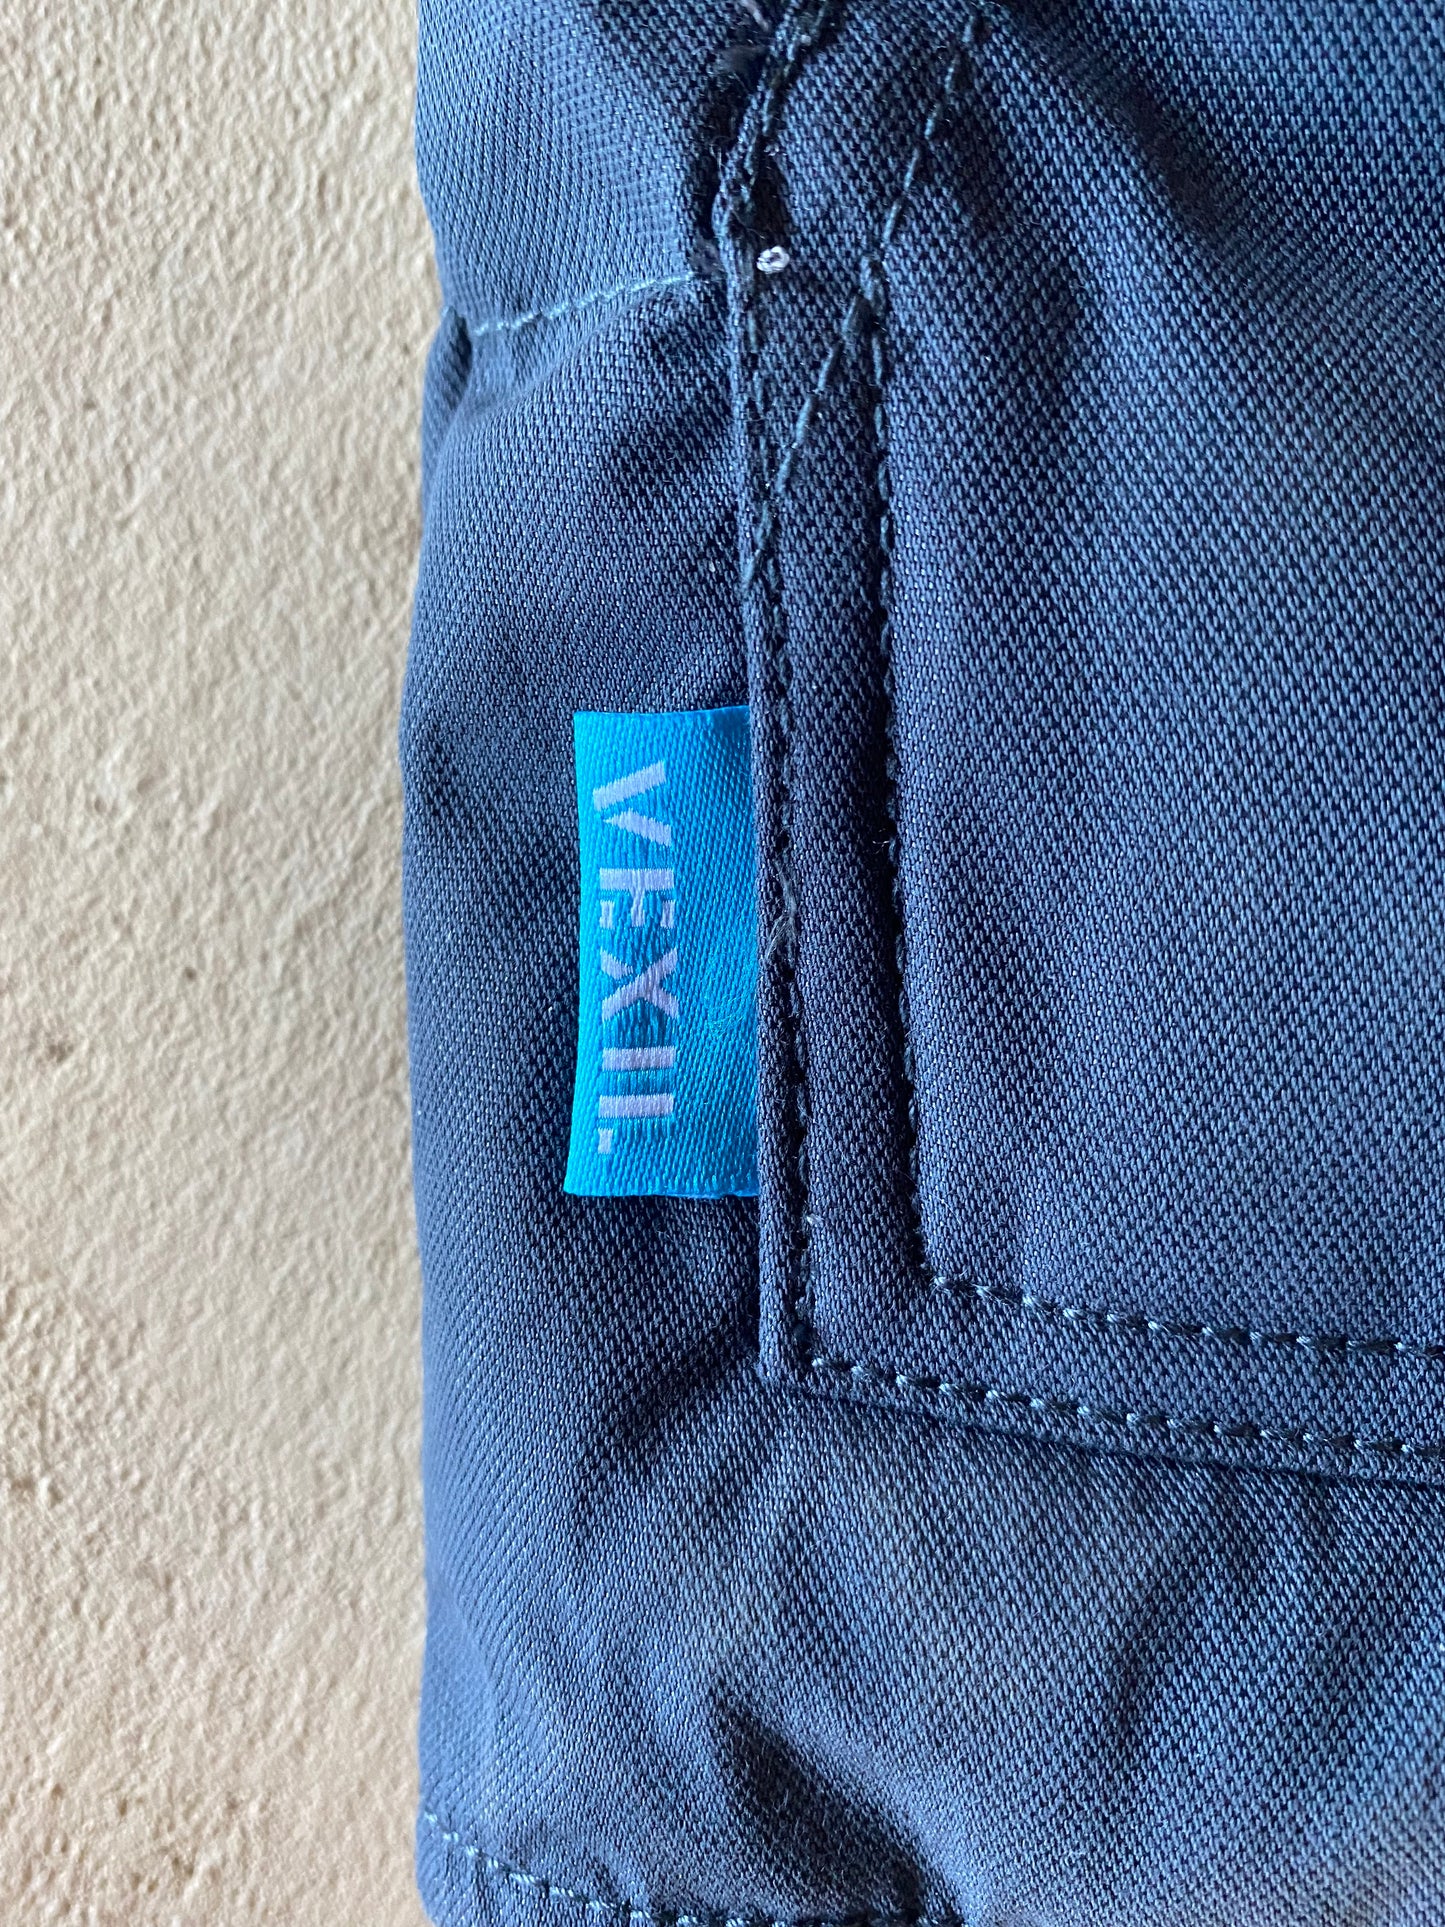 Vexil Brand - Men's Insulated Vest - Charcoal/Black